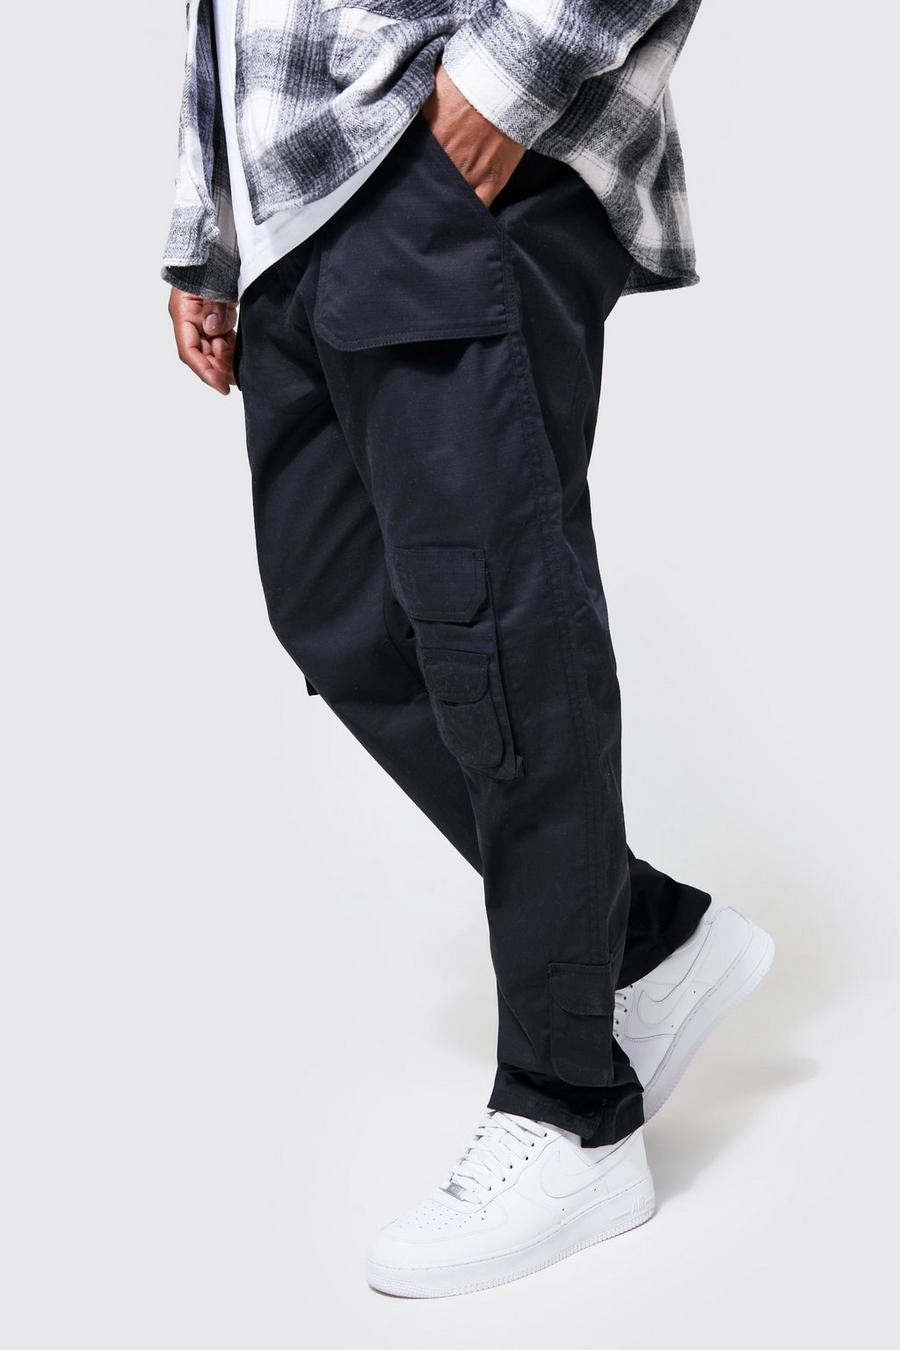 Black מכנסי דגמ"ח בגזרה צרה עם כיסים מרובים למידות גדולות image number 1